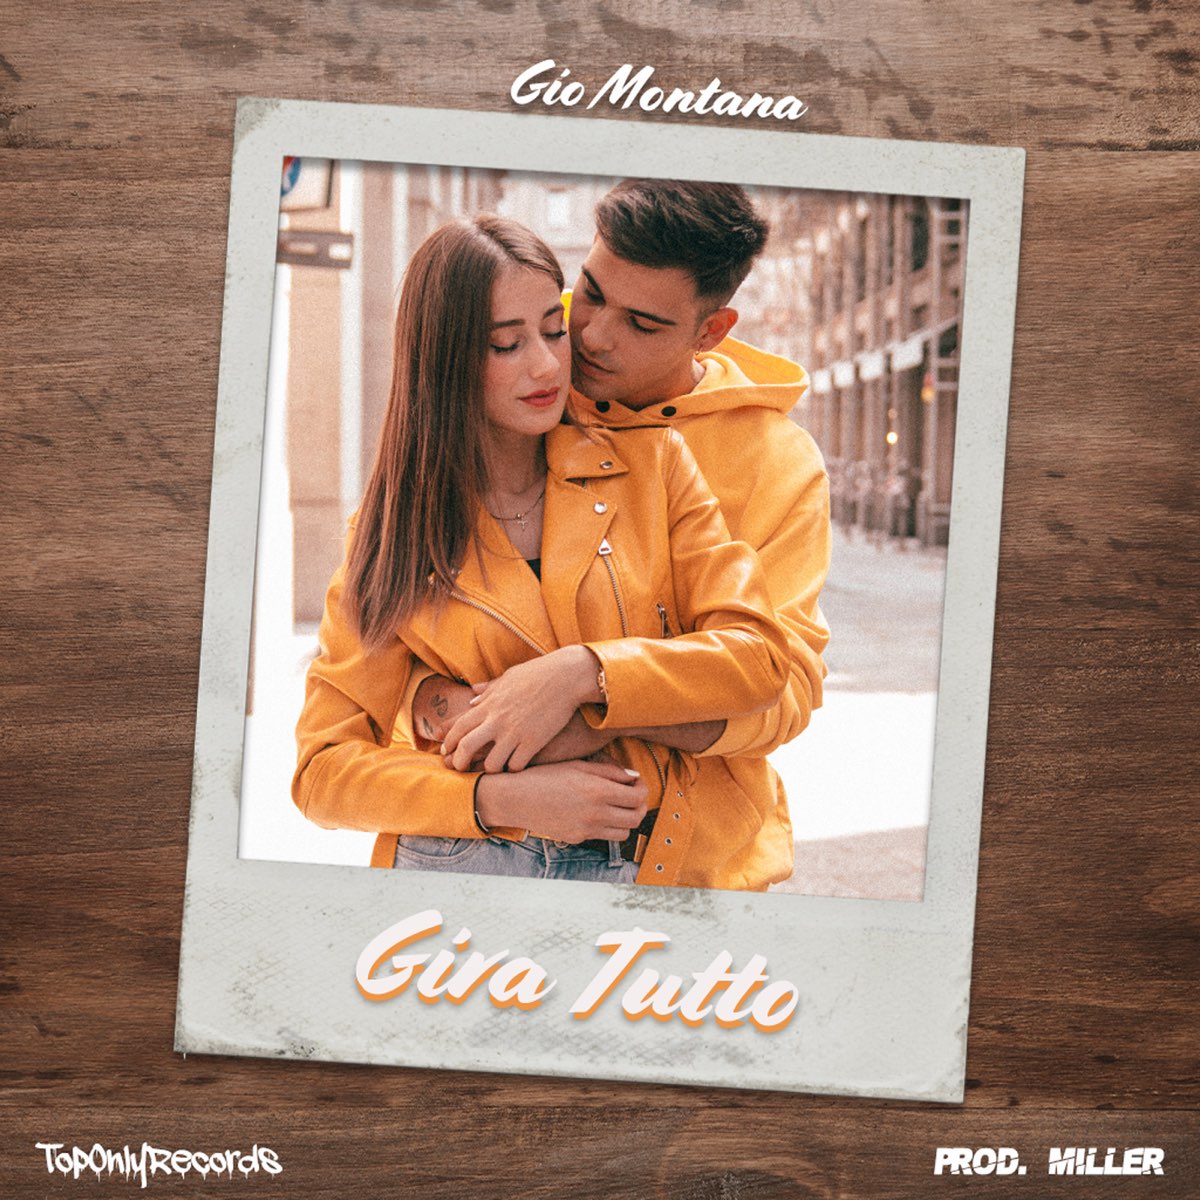 Gira Tutto - Single by Gio Montana on Apple Music